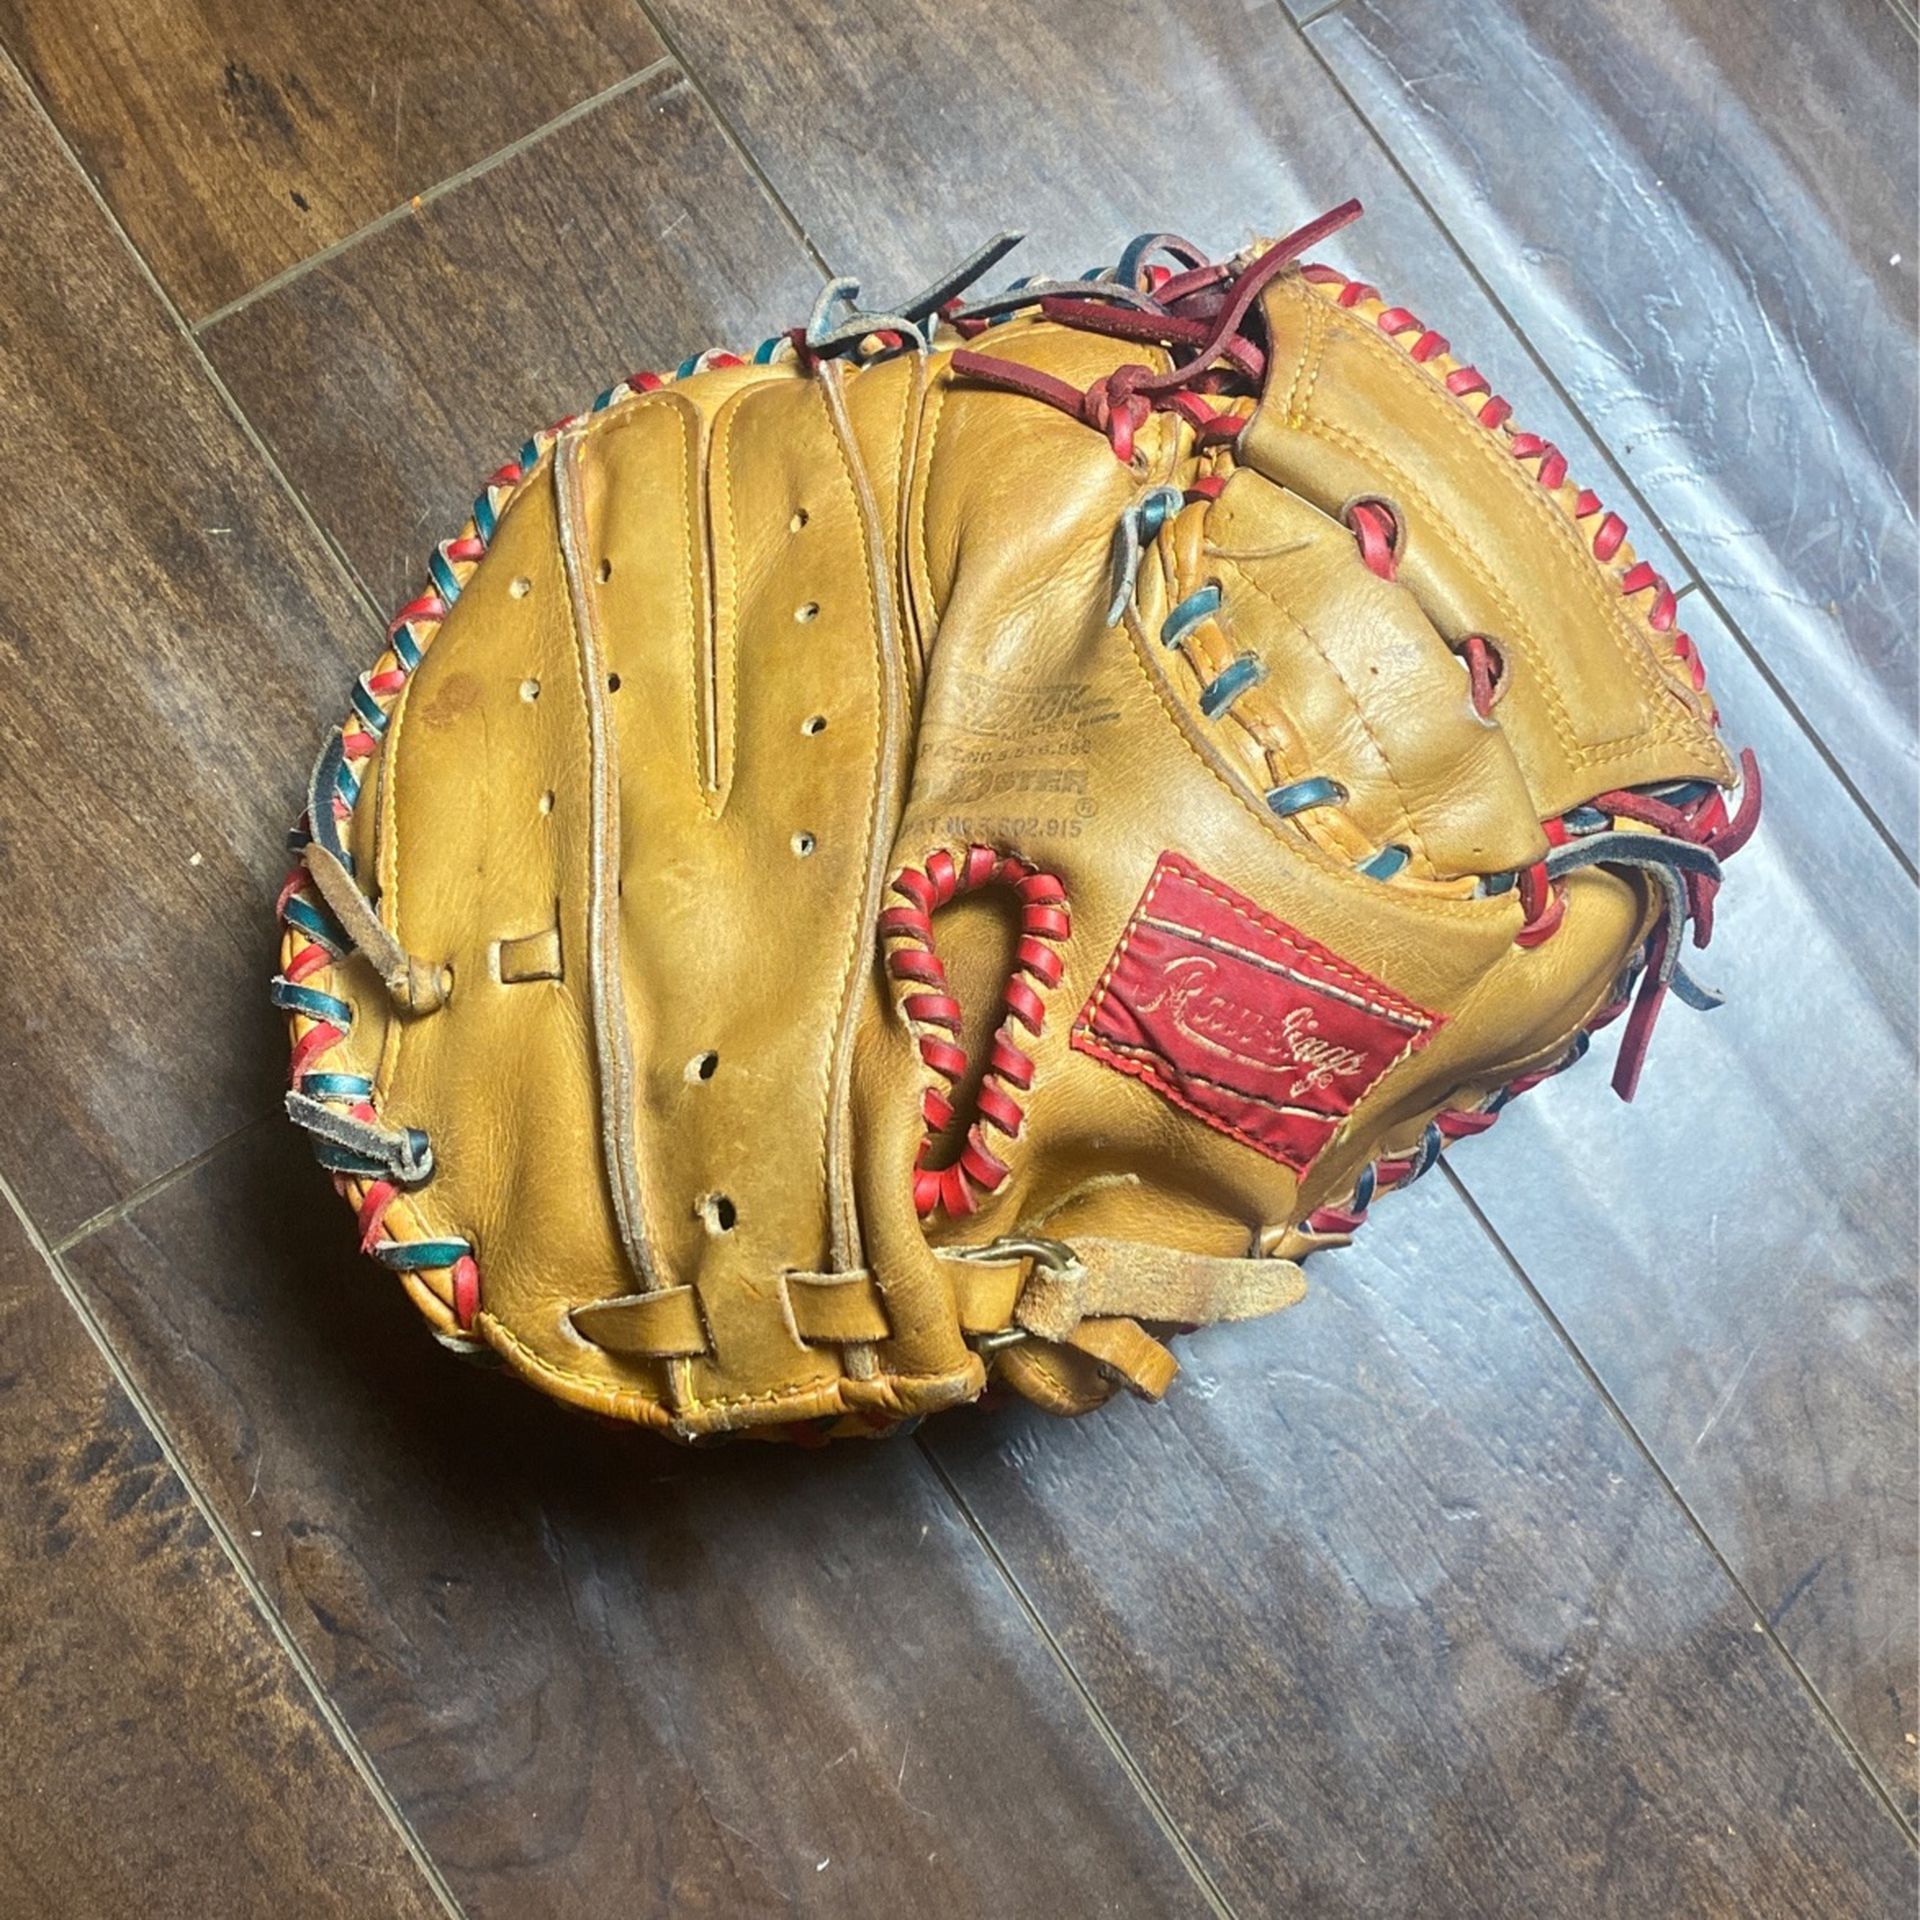 Rawlings Catchers Glove